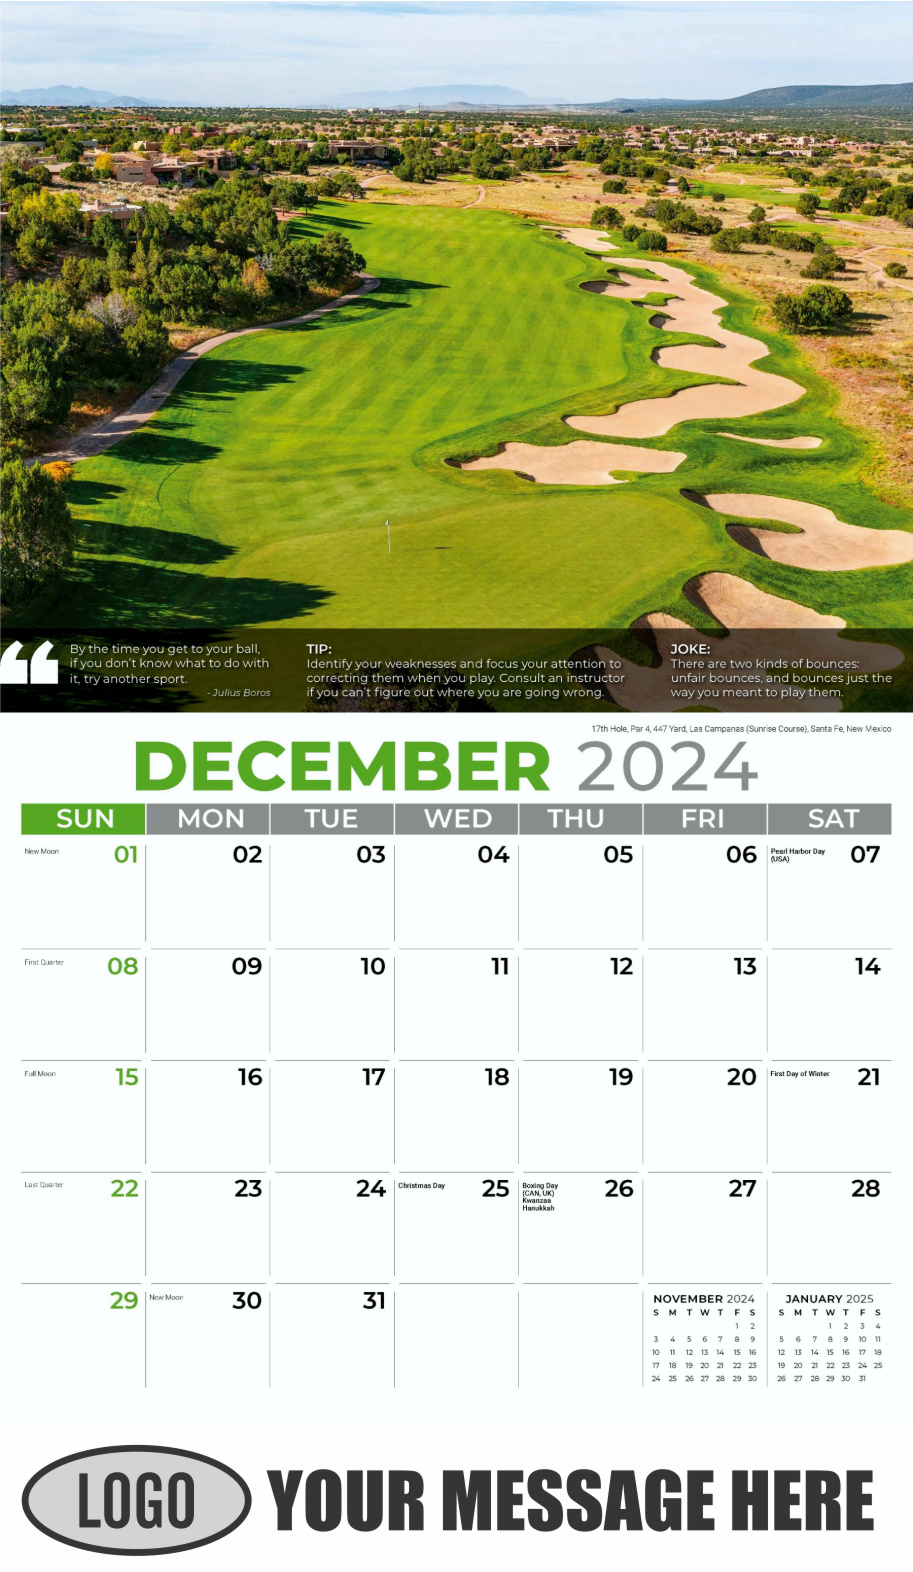 Golf Tips 2024 Business Promo Calendar - December